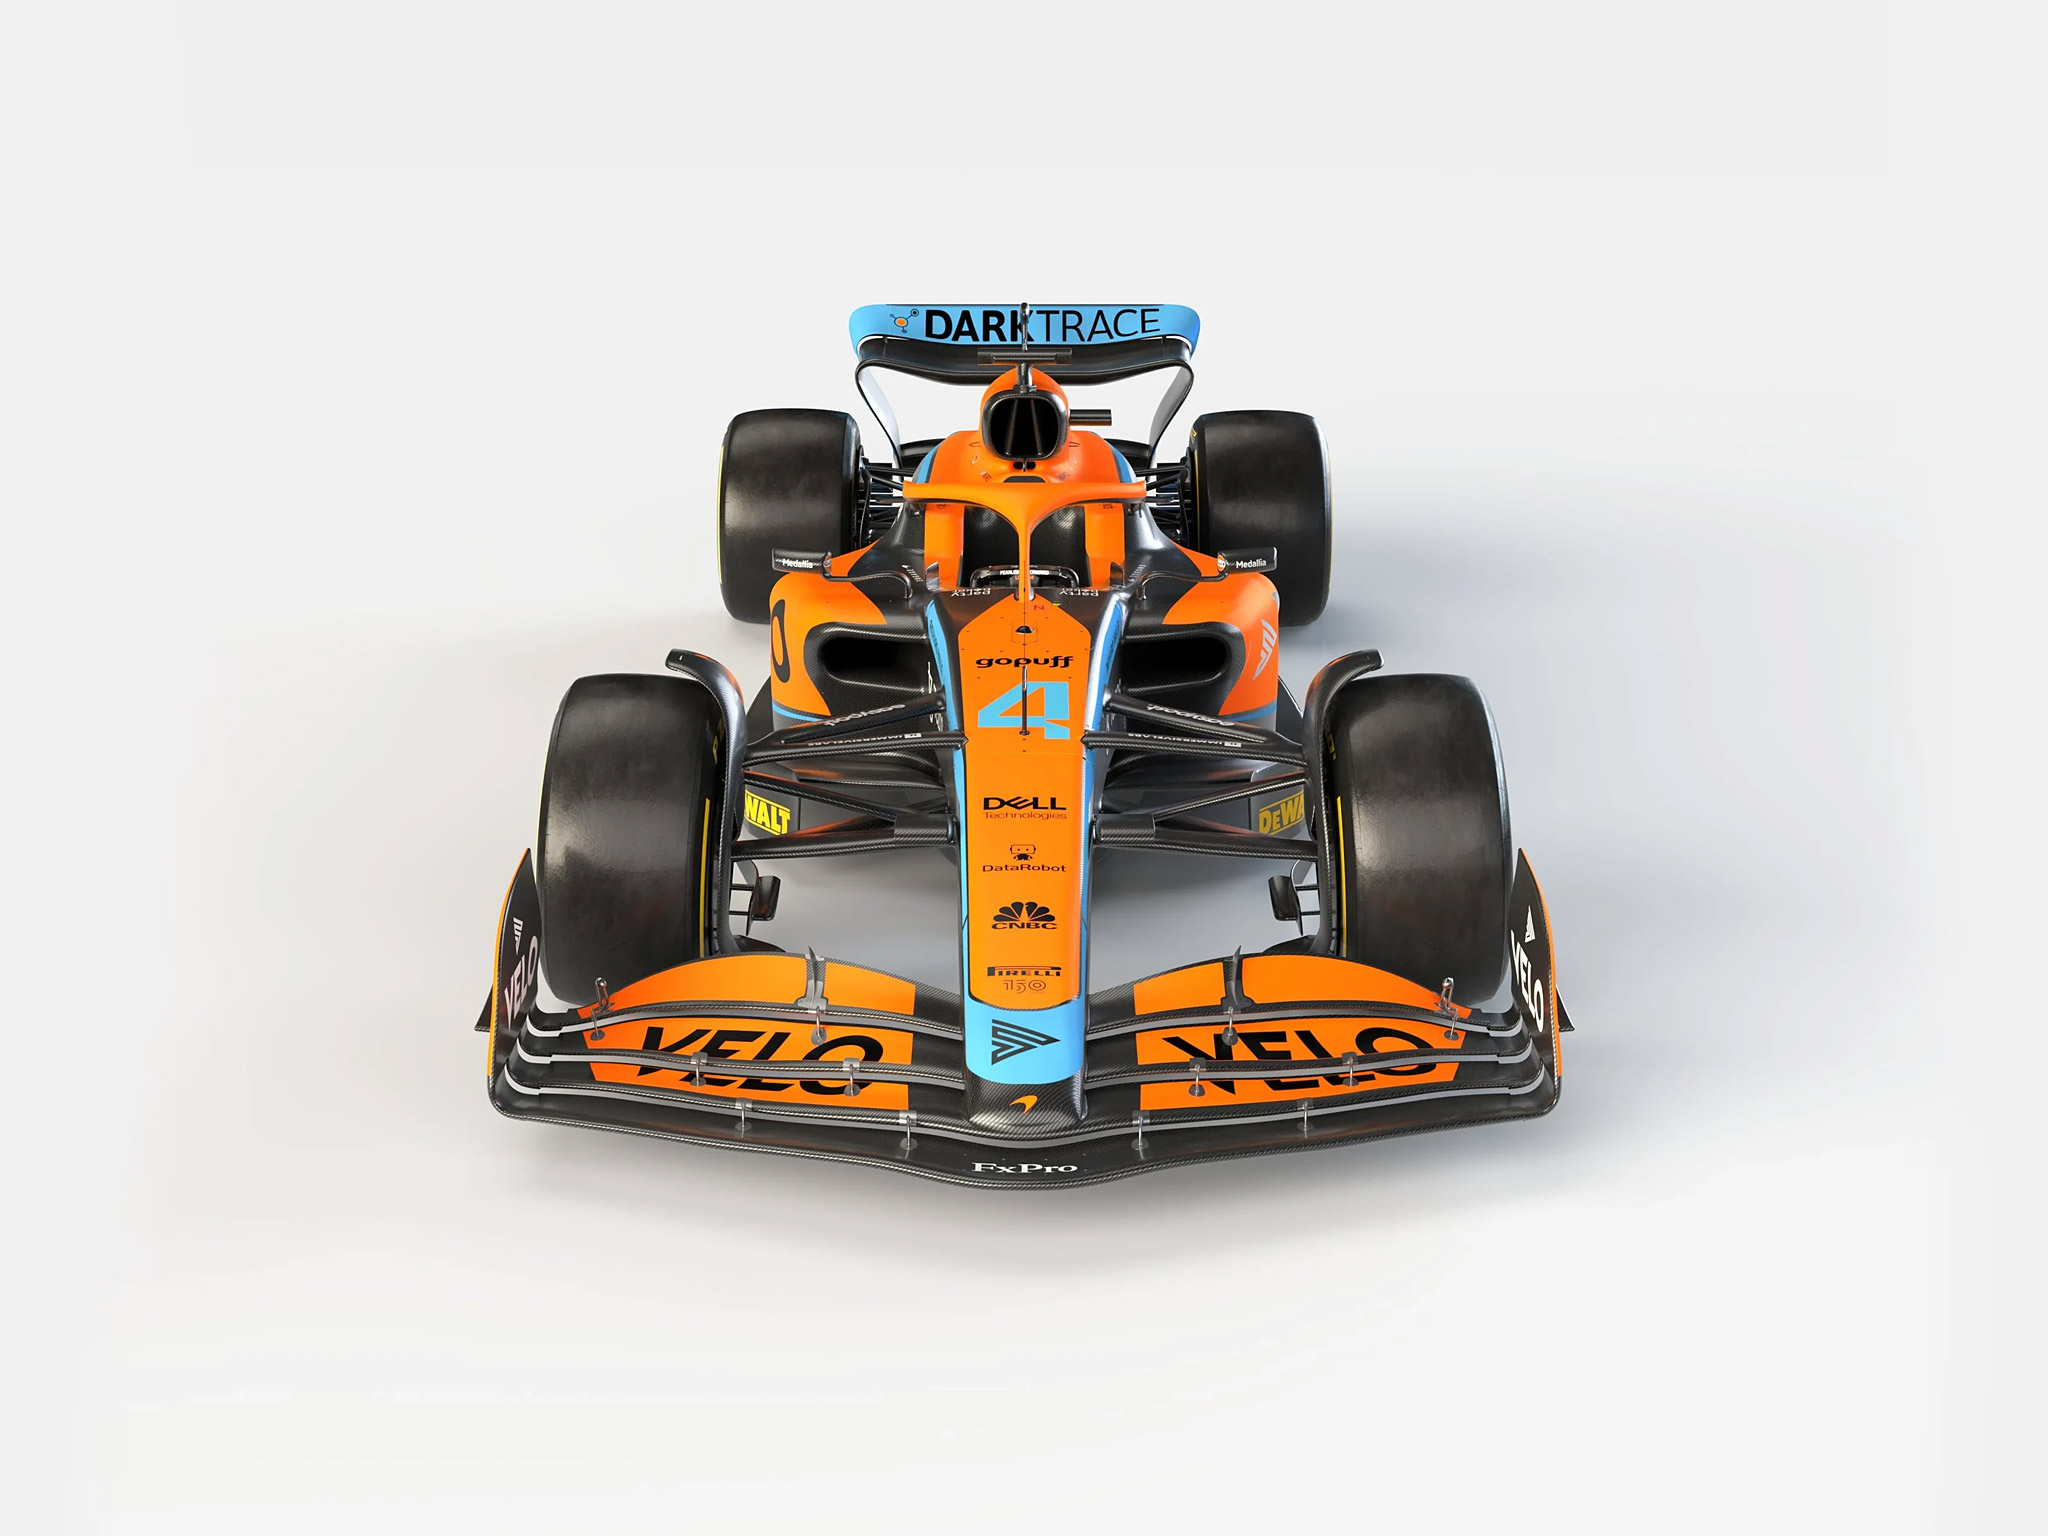  2022 McLaren MCL36 Wallpaper.